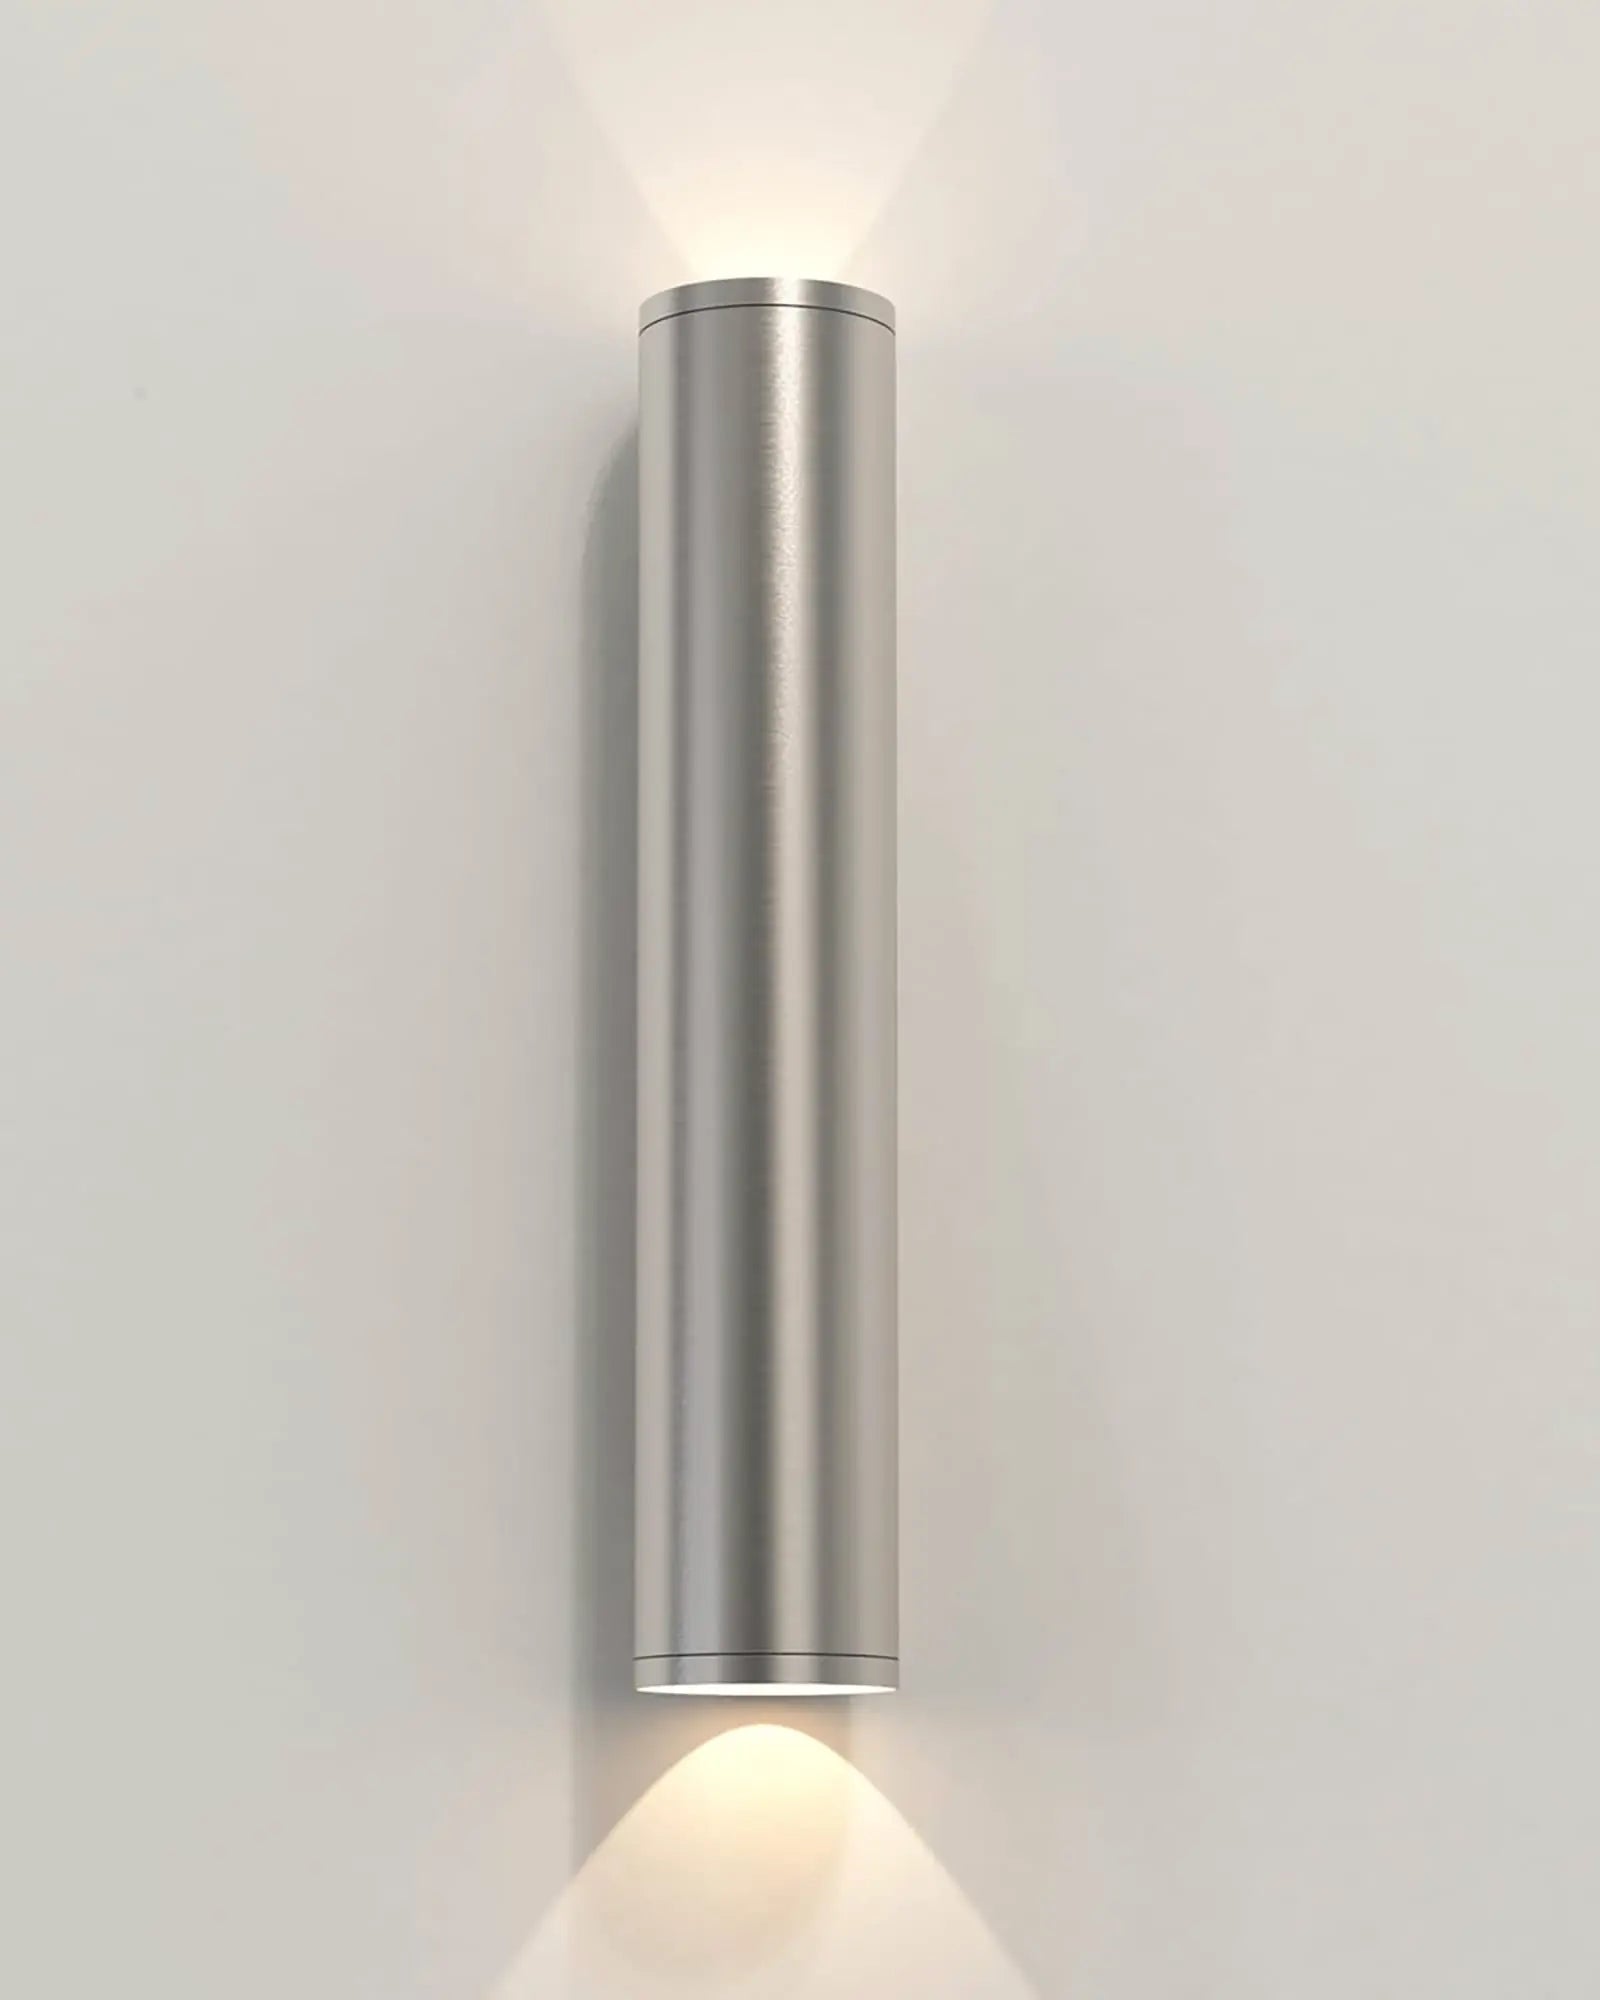 Aba minimalistic cylinder outdoor wall light nickel large